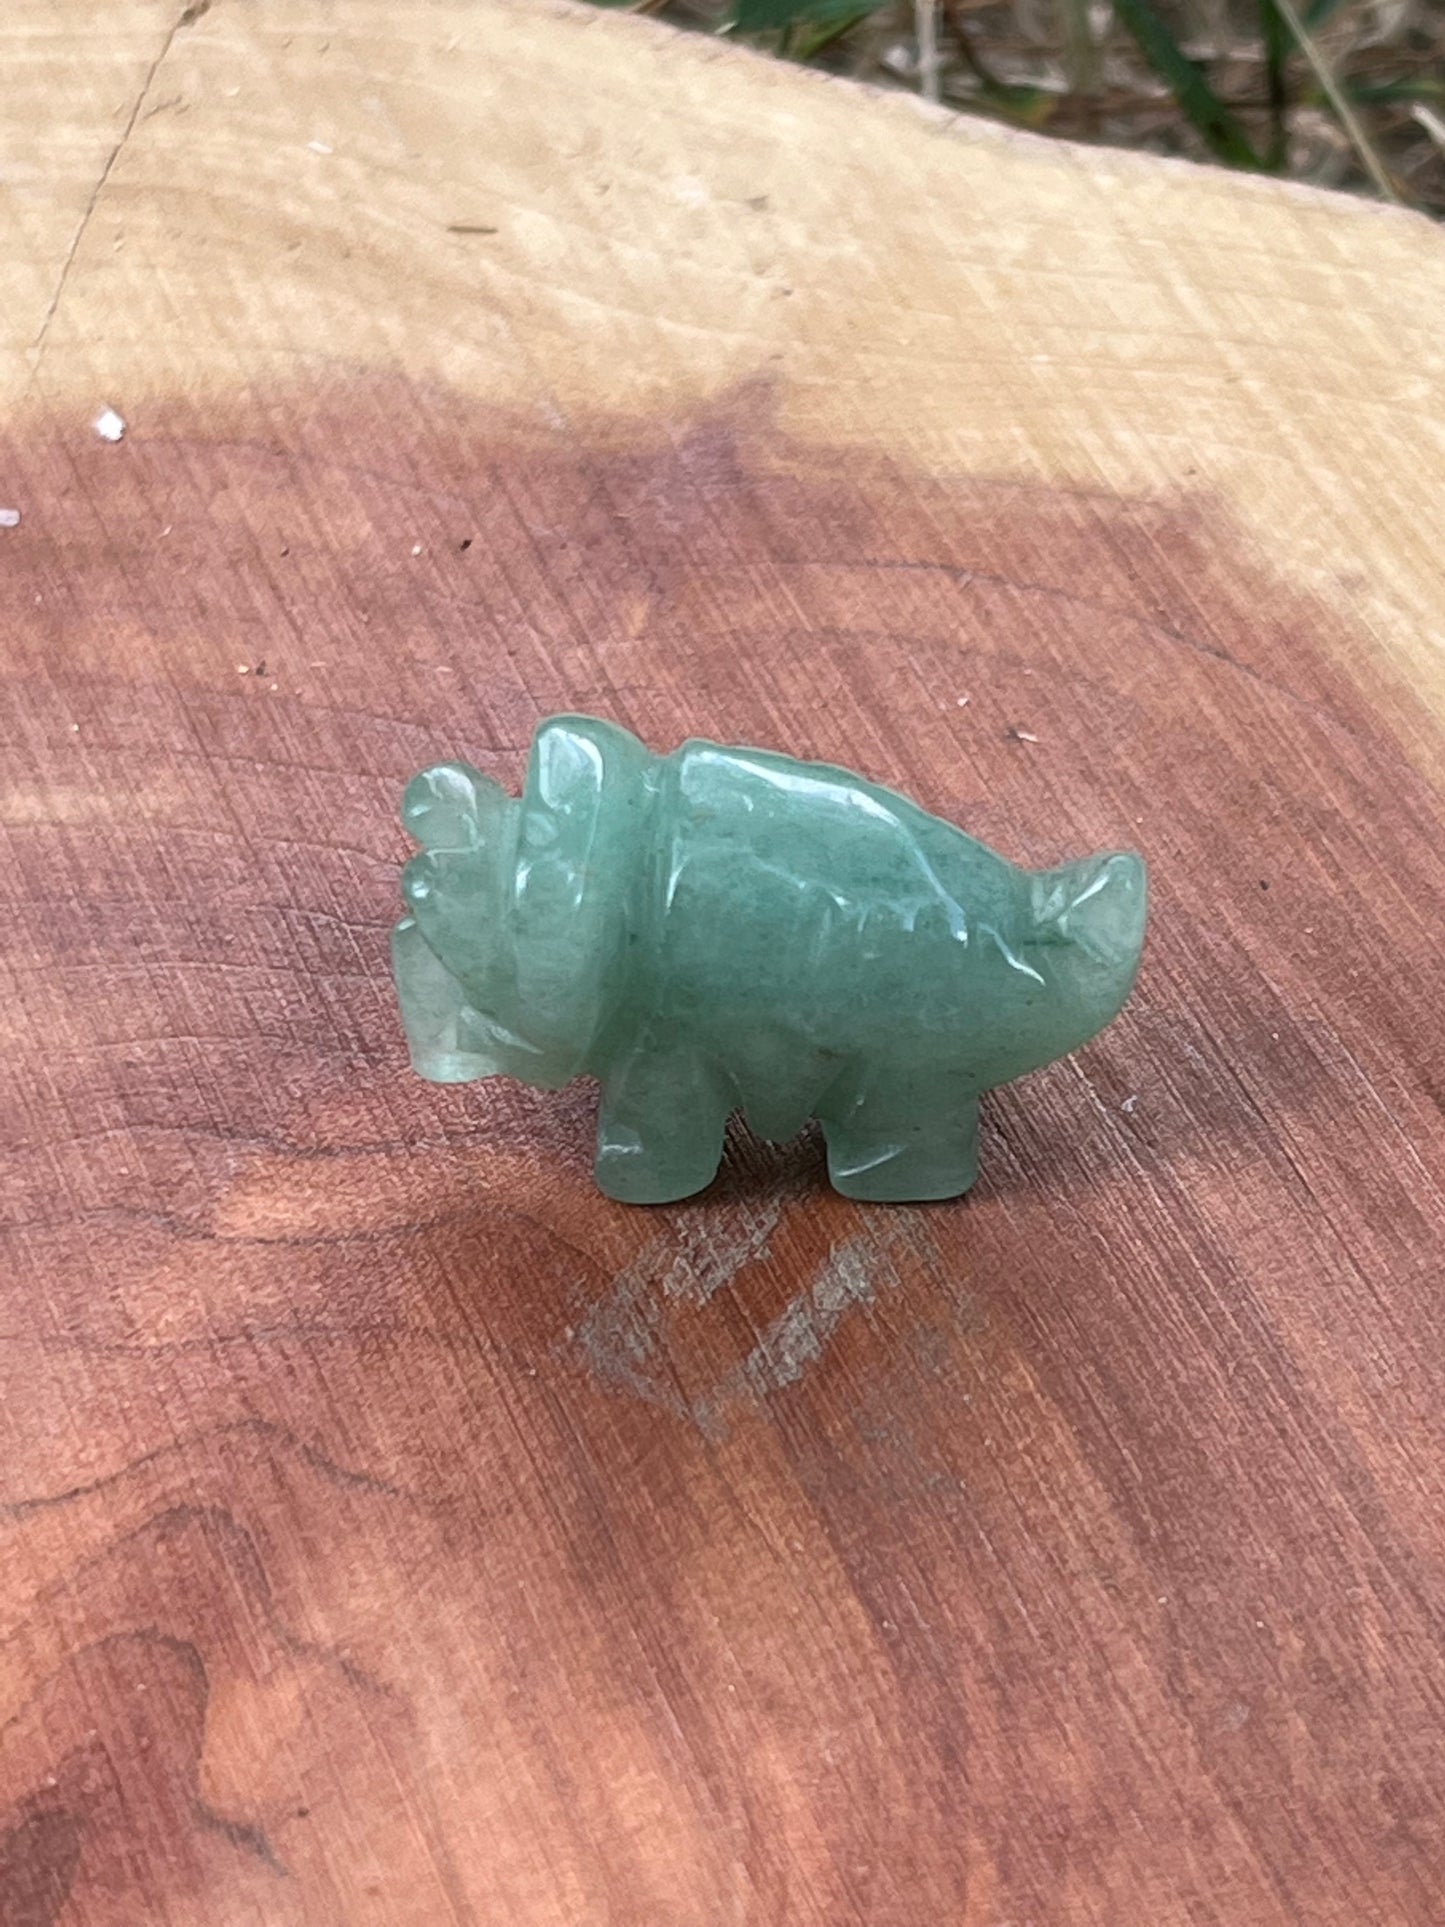 Dinosaur Crystal Carving - Minis